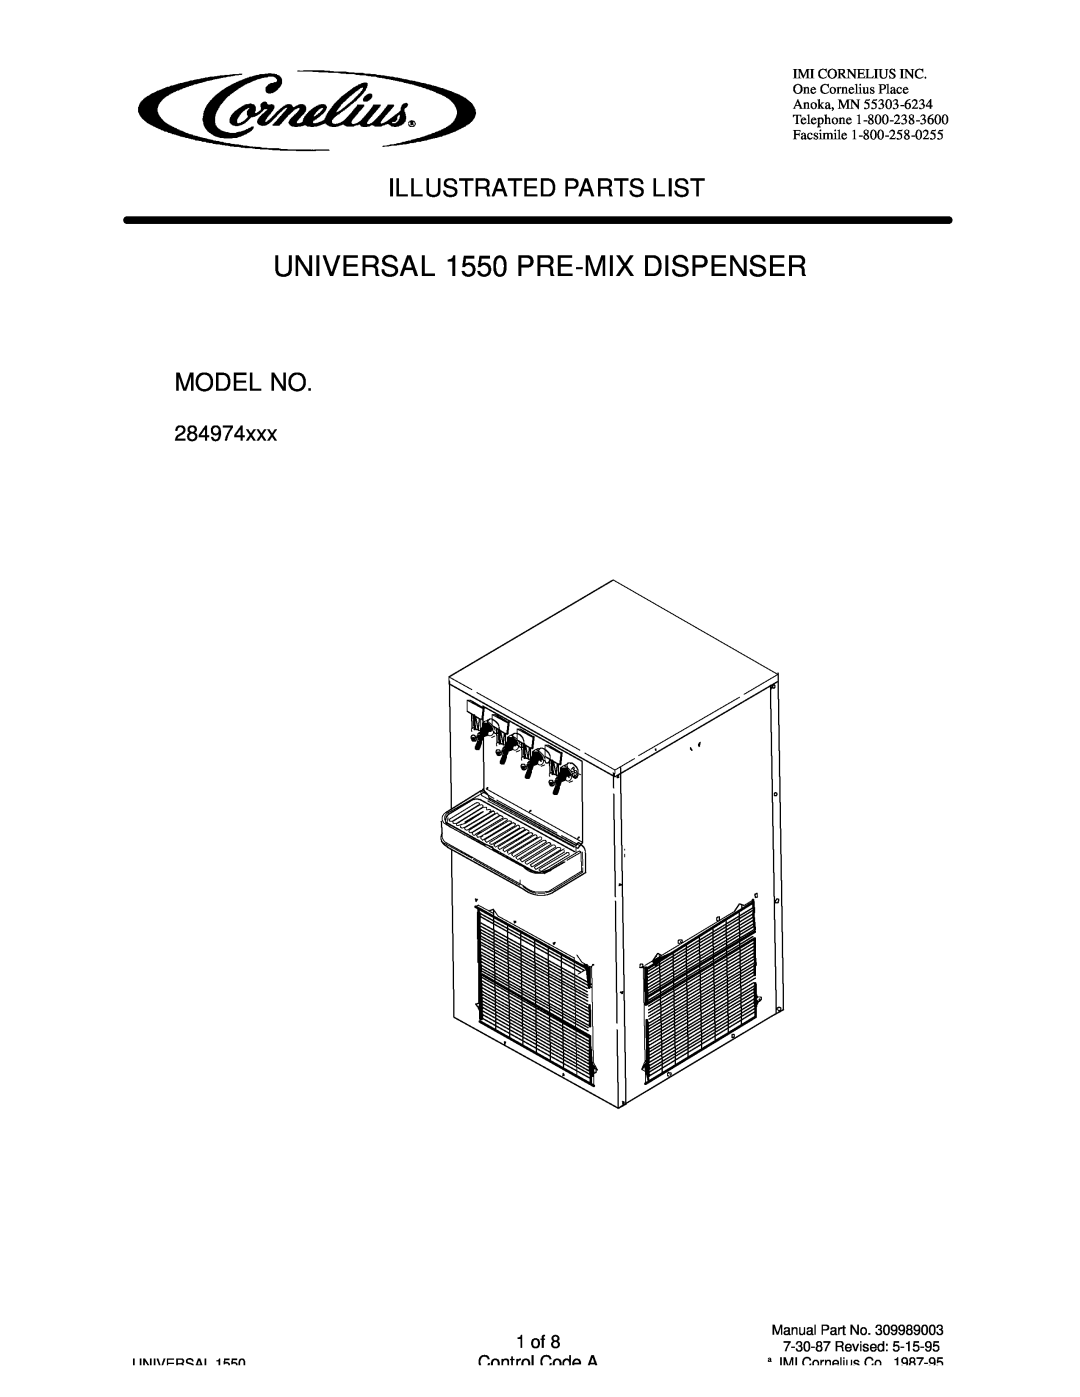 Cornelius 284974XXX manual UNIVERSAL 1550 PRE-MIXDISPENSER, Illustrated Parts List, Model No, of Control Code A, 284974xxx 